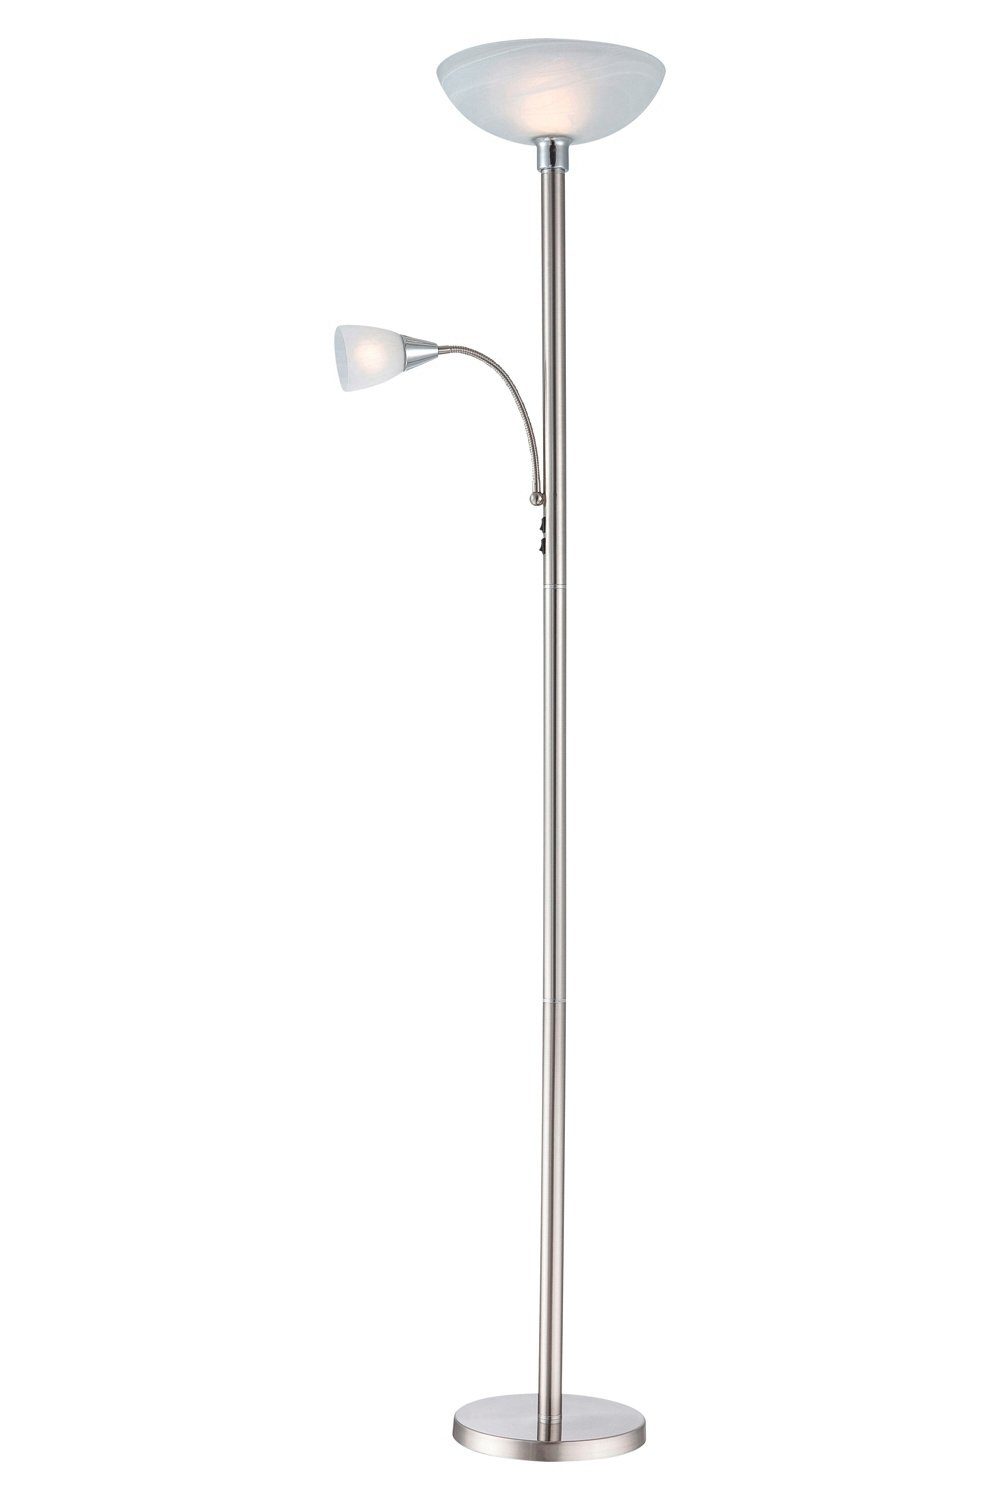 Globo LED Uplighter BLADE, 2-flammig, H 178 cm, Nickelfarben, Weiß, Lesearm, LED wechselbar, Warmweiß, Metall, Glasschirme